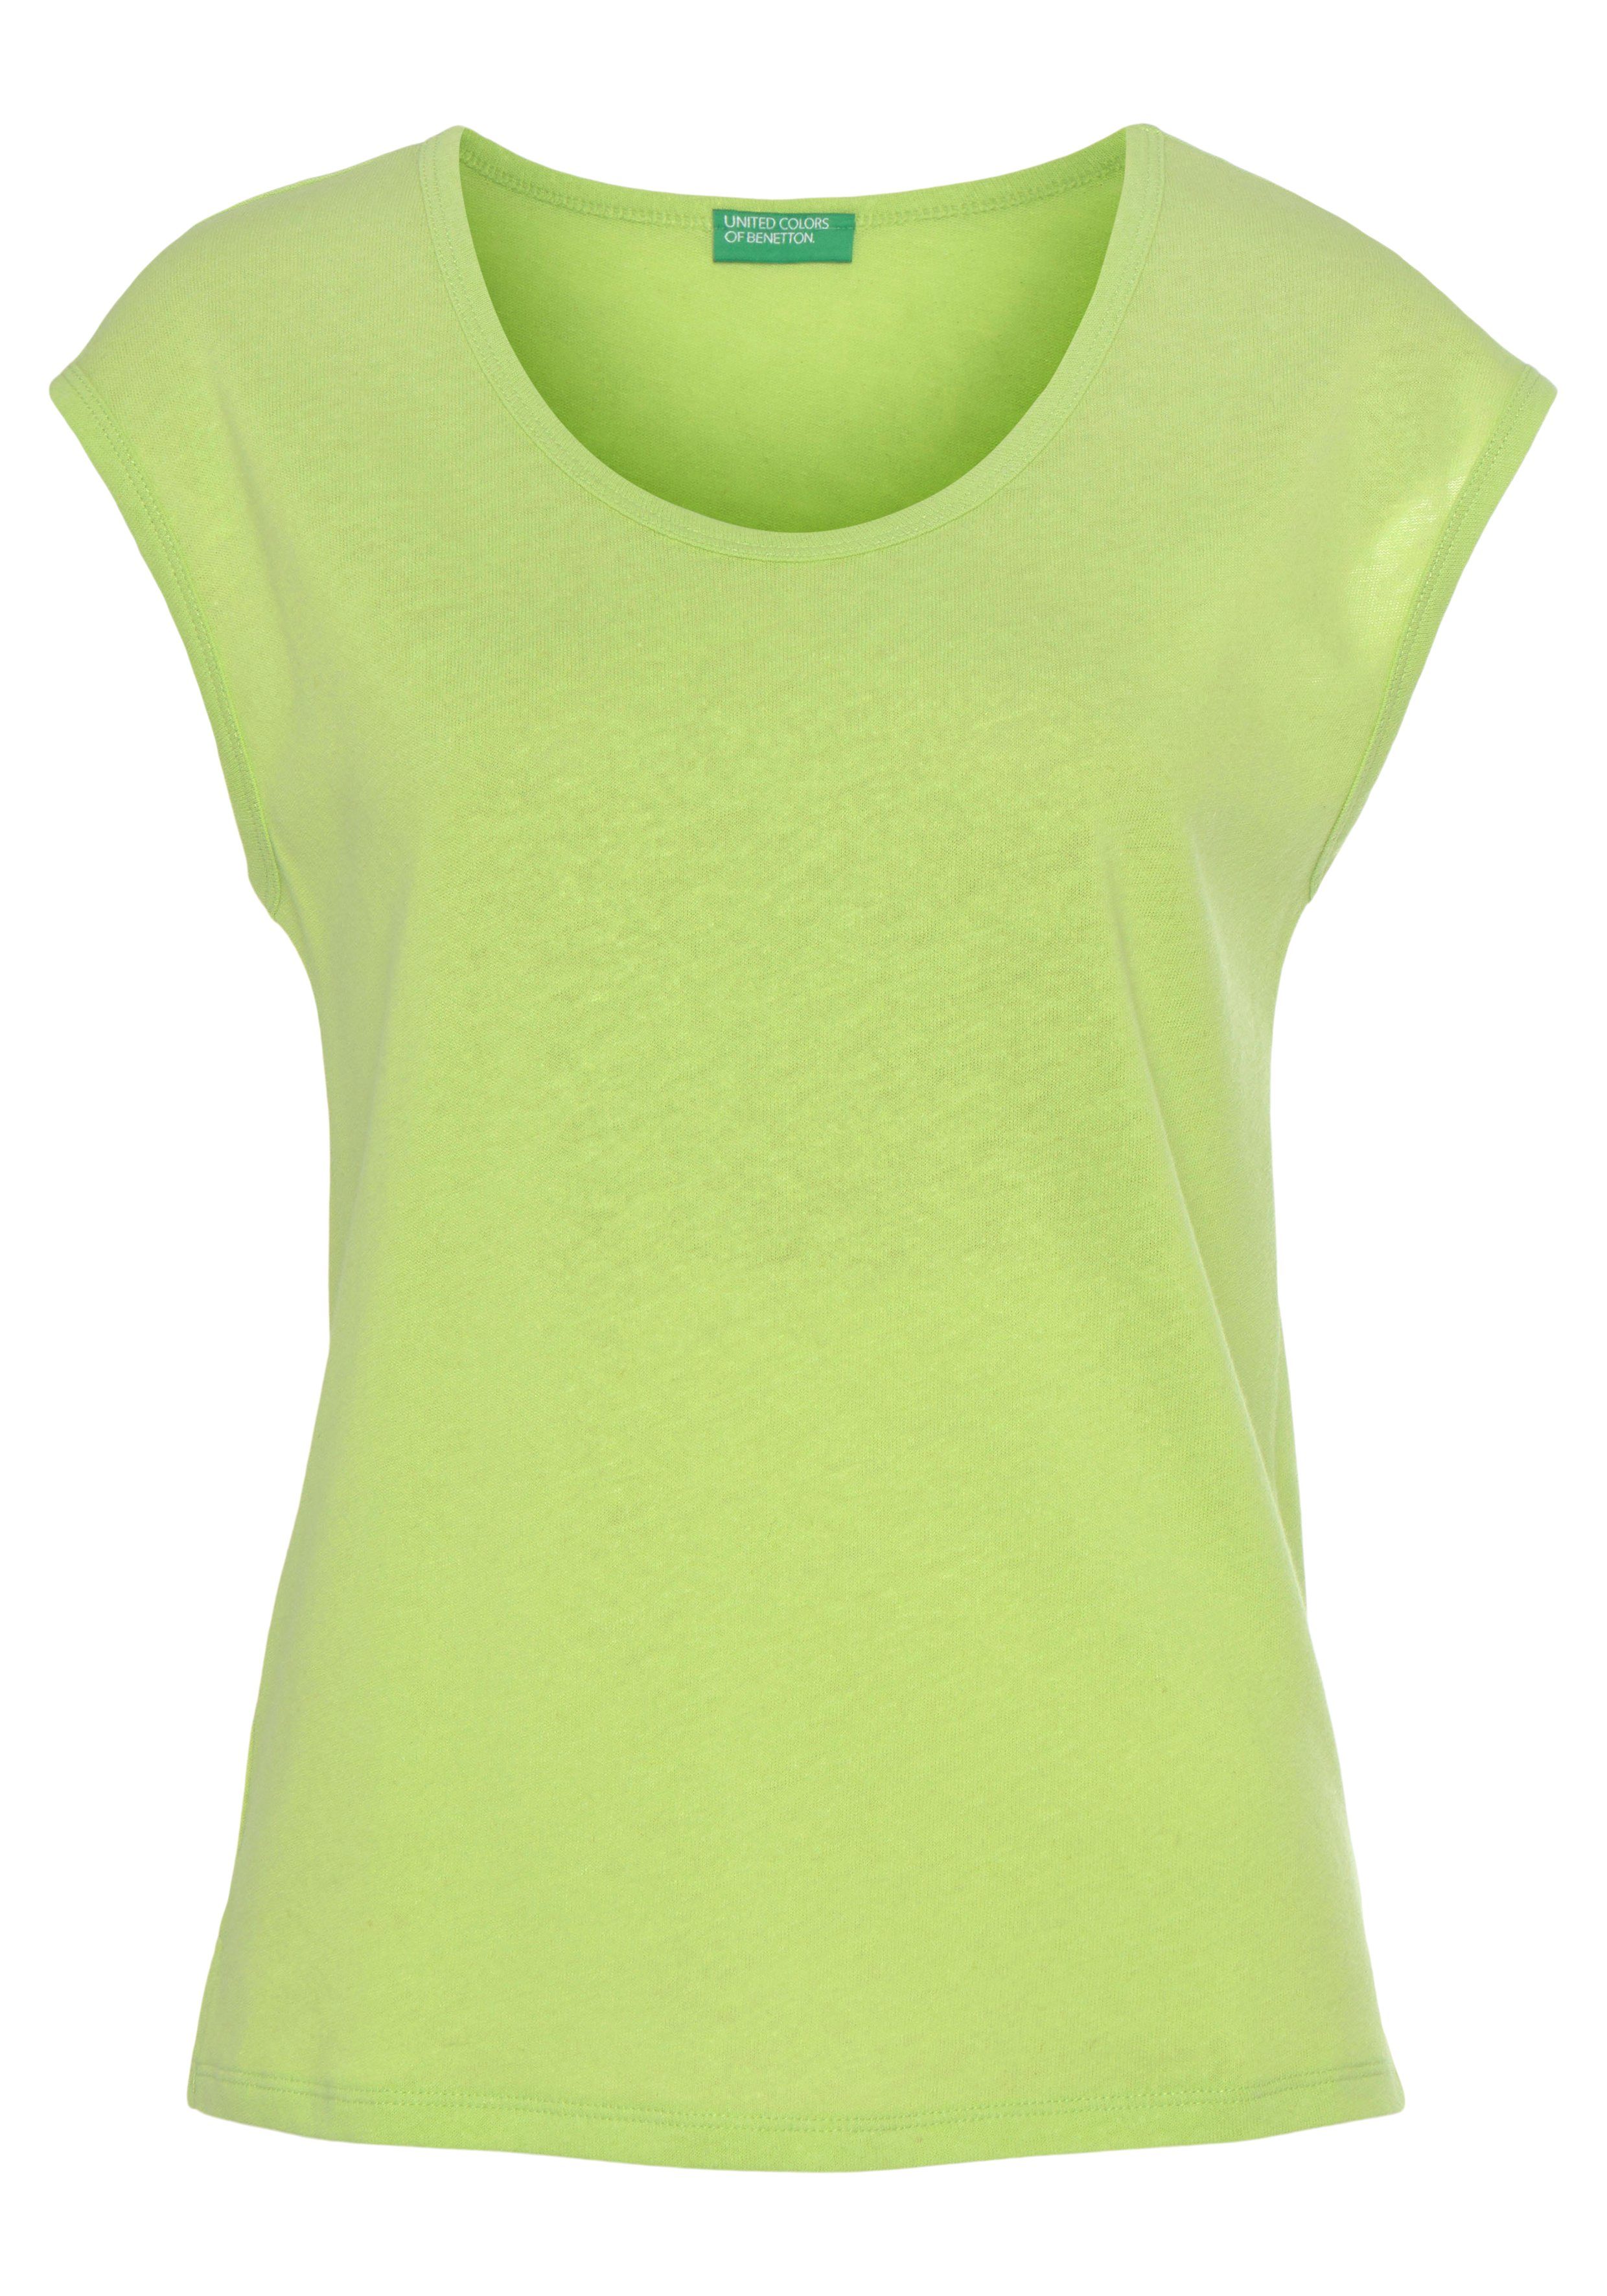 United Colors of Benetton T-Shirt grün mit Rundhalsausschnitt